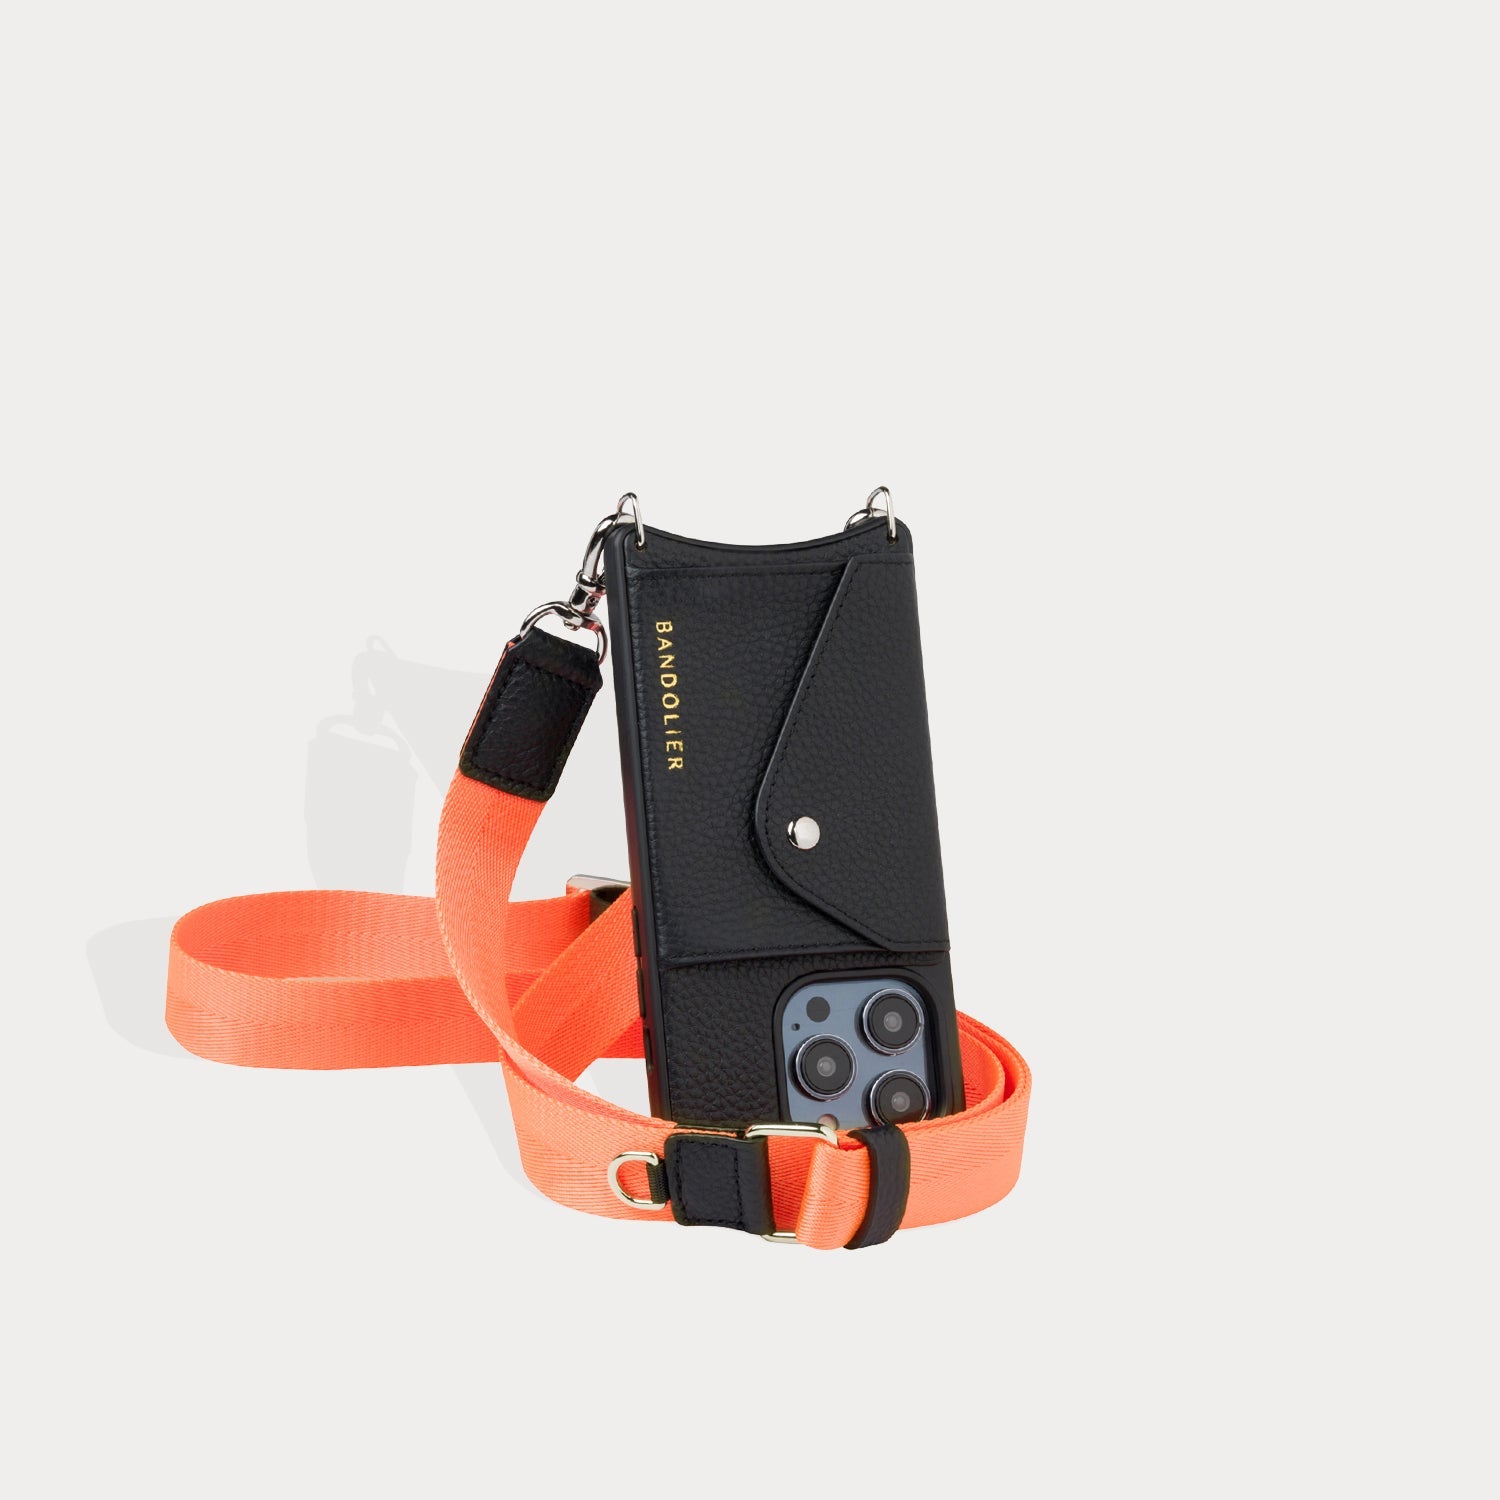 Orange Italian leather camera style crossbody bag with wide strap